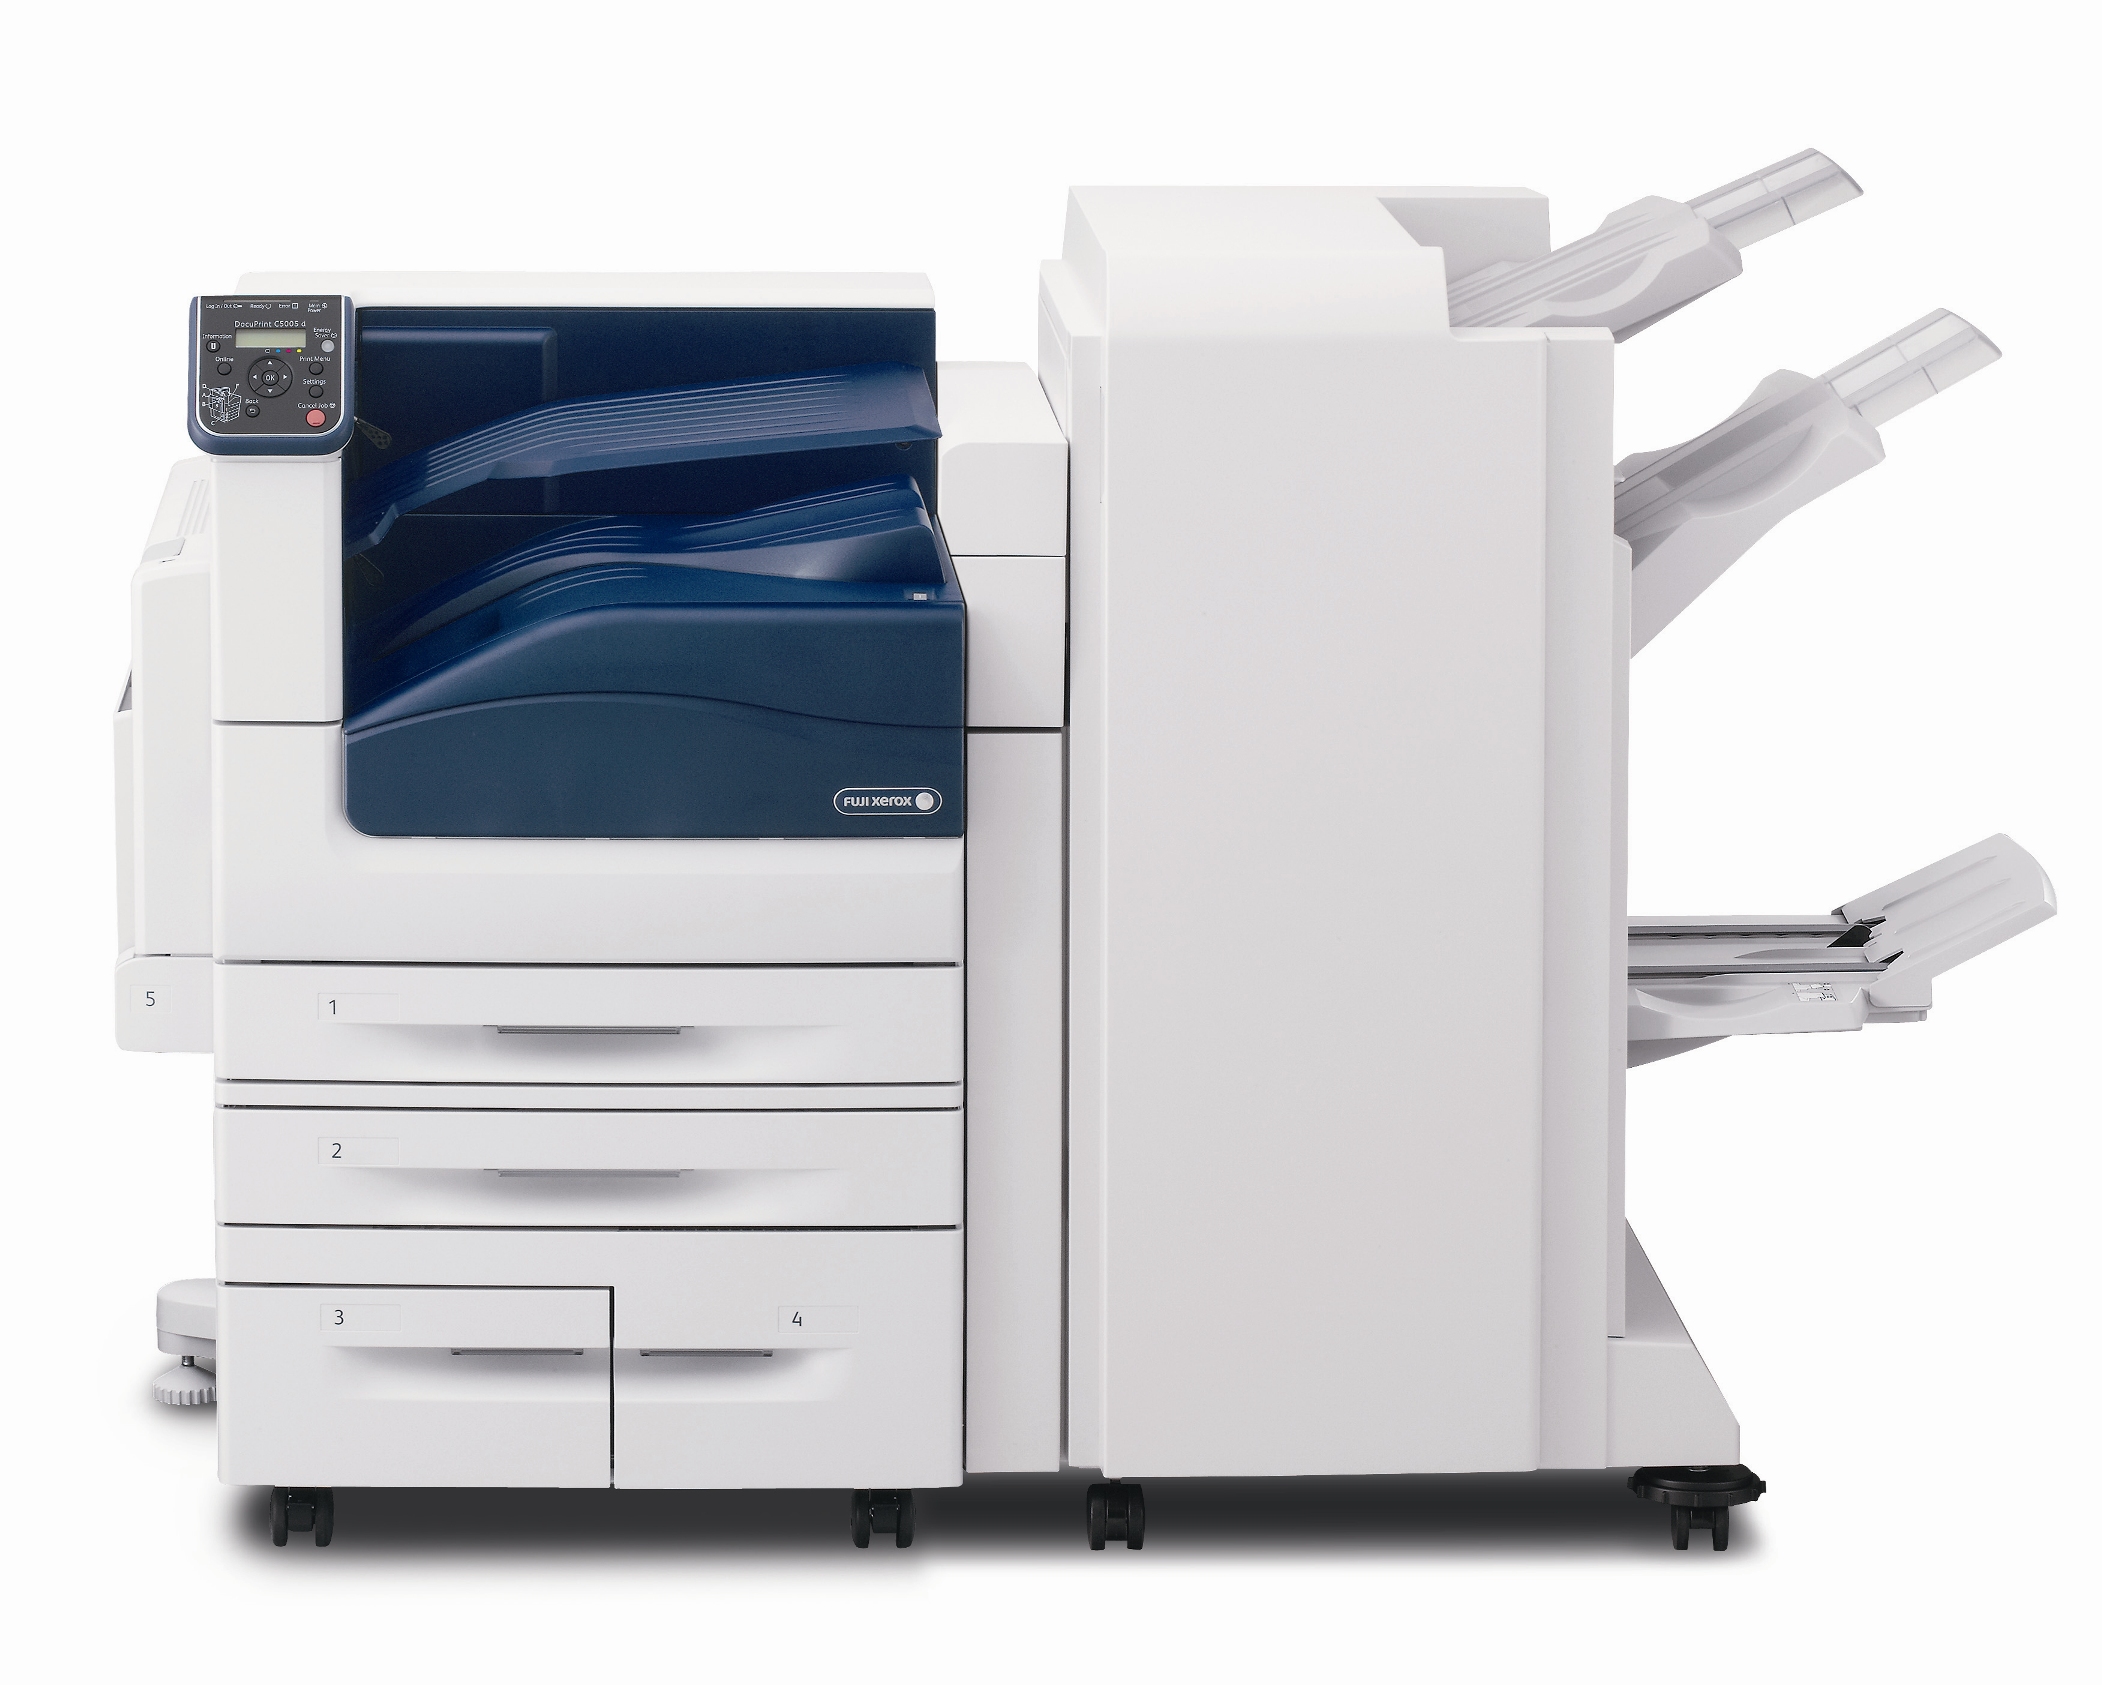 Fuji Xerox DocuPrint C5005d A3 Colour Printer